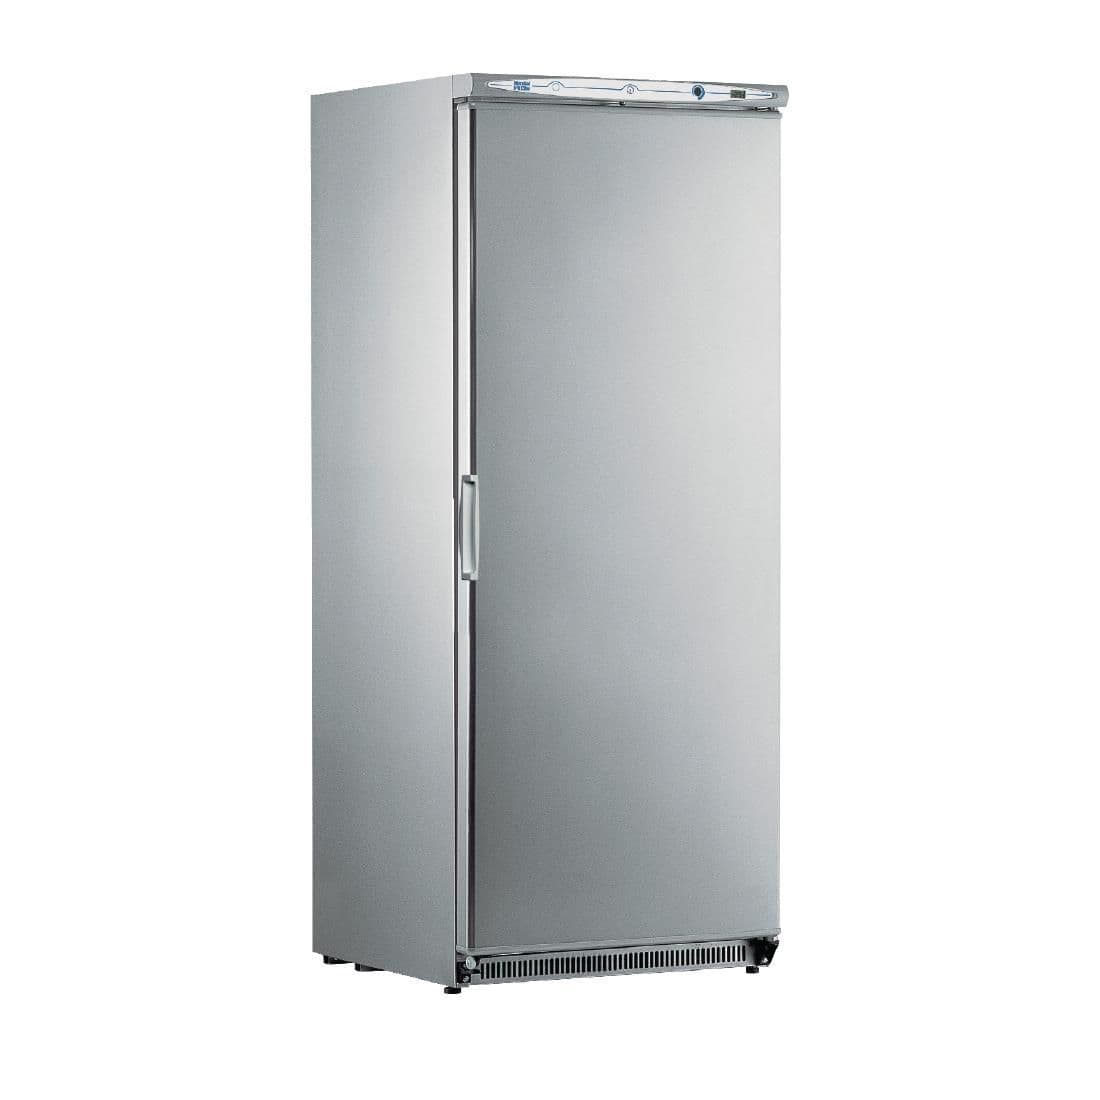 CC651 Mondial Elite 1 Door 580Ltr Cabinet Freezer Stainless Steel KICNX60LT